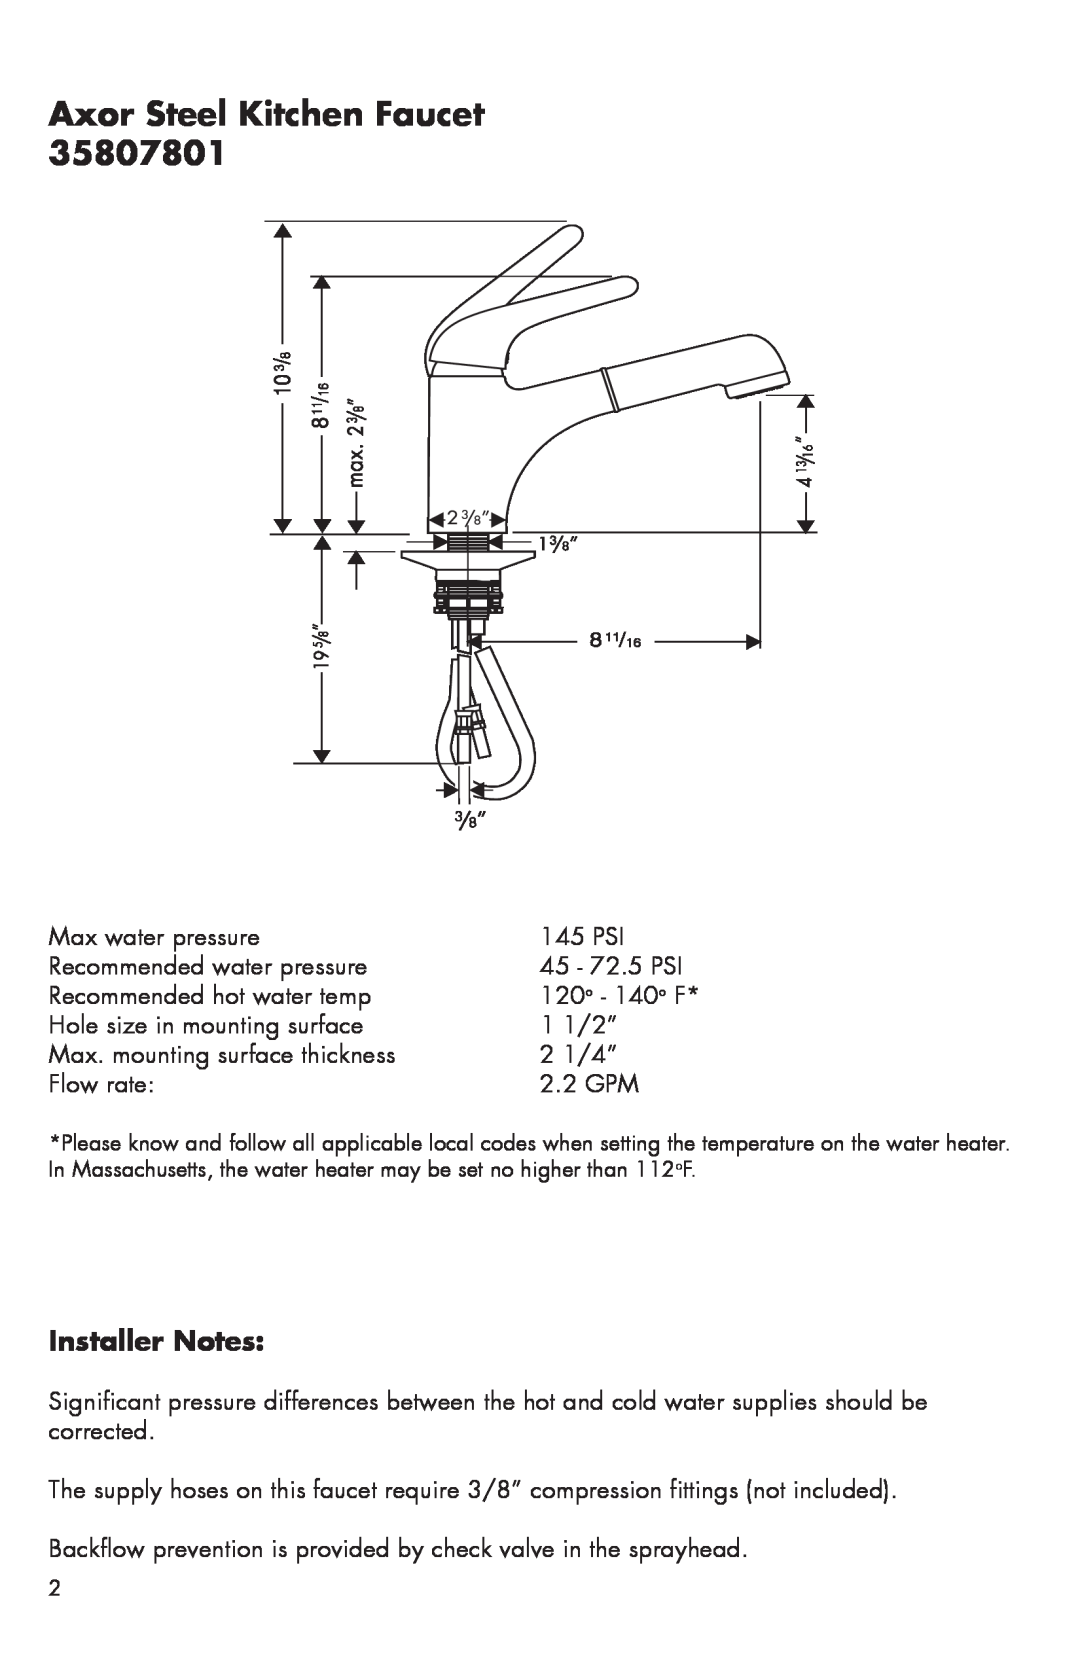 Hans Grohe 35807801 installation instructions Installer Notes, Axor Steel Kitchen Faucet 